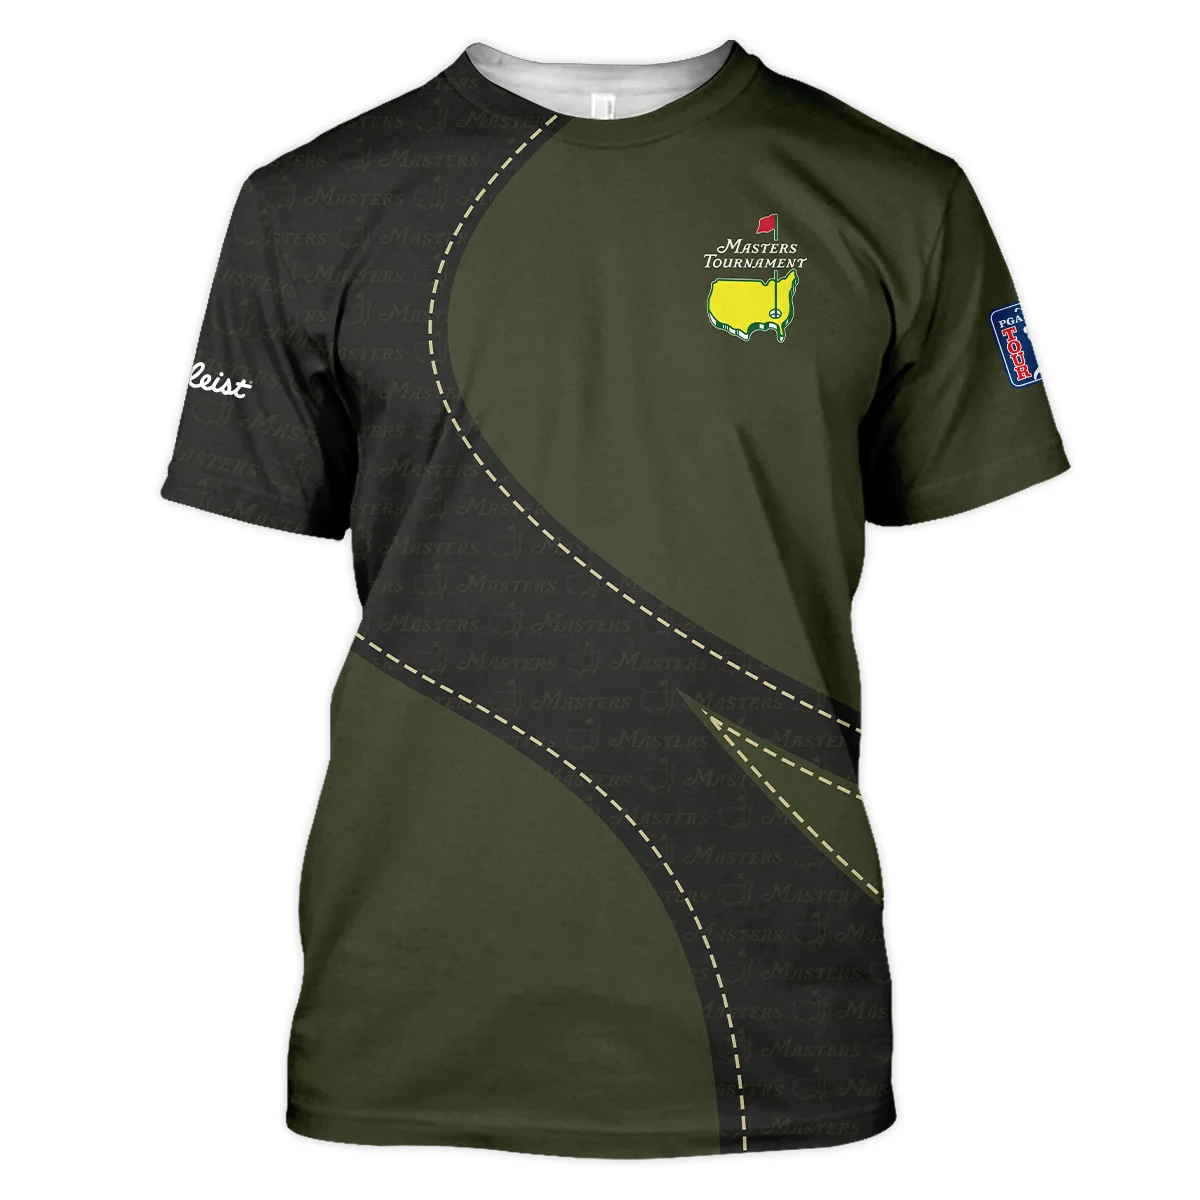 Pattern Military Green Masters Tournament Titleist Zipper Polo Shirt Style Classic Zipper Polo Shirt For Men